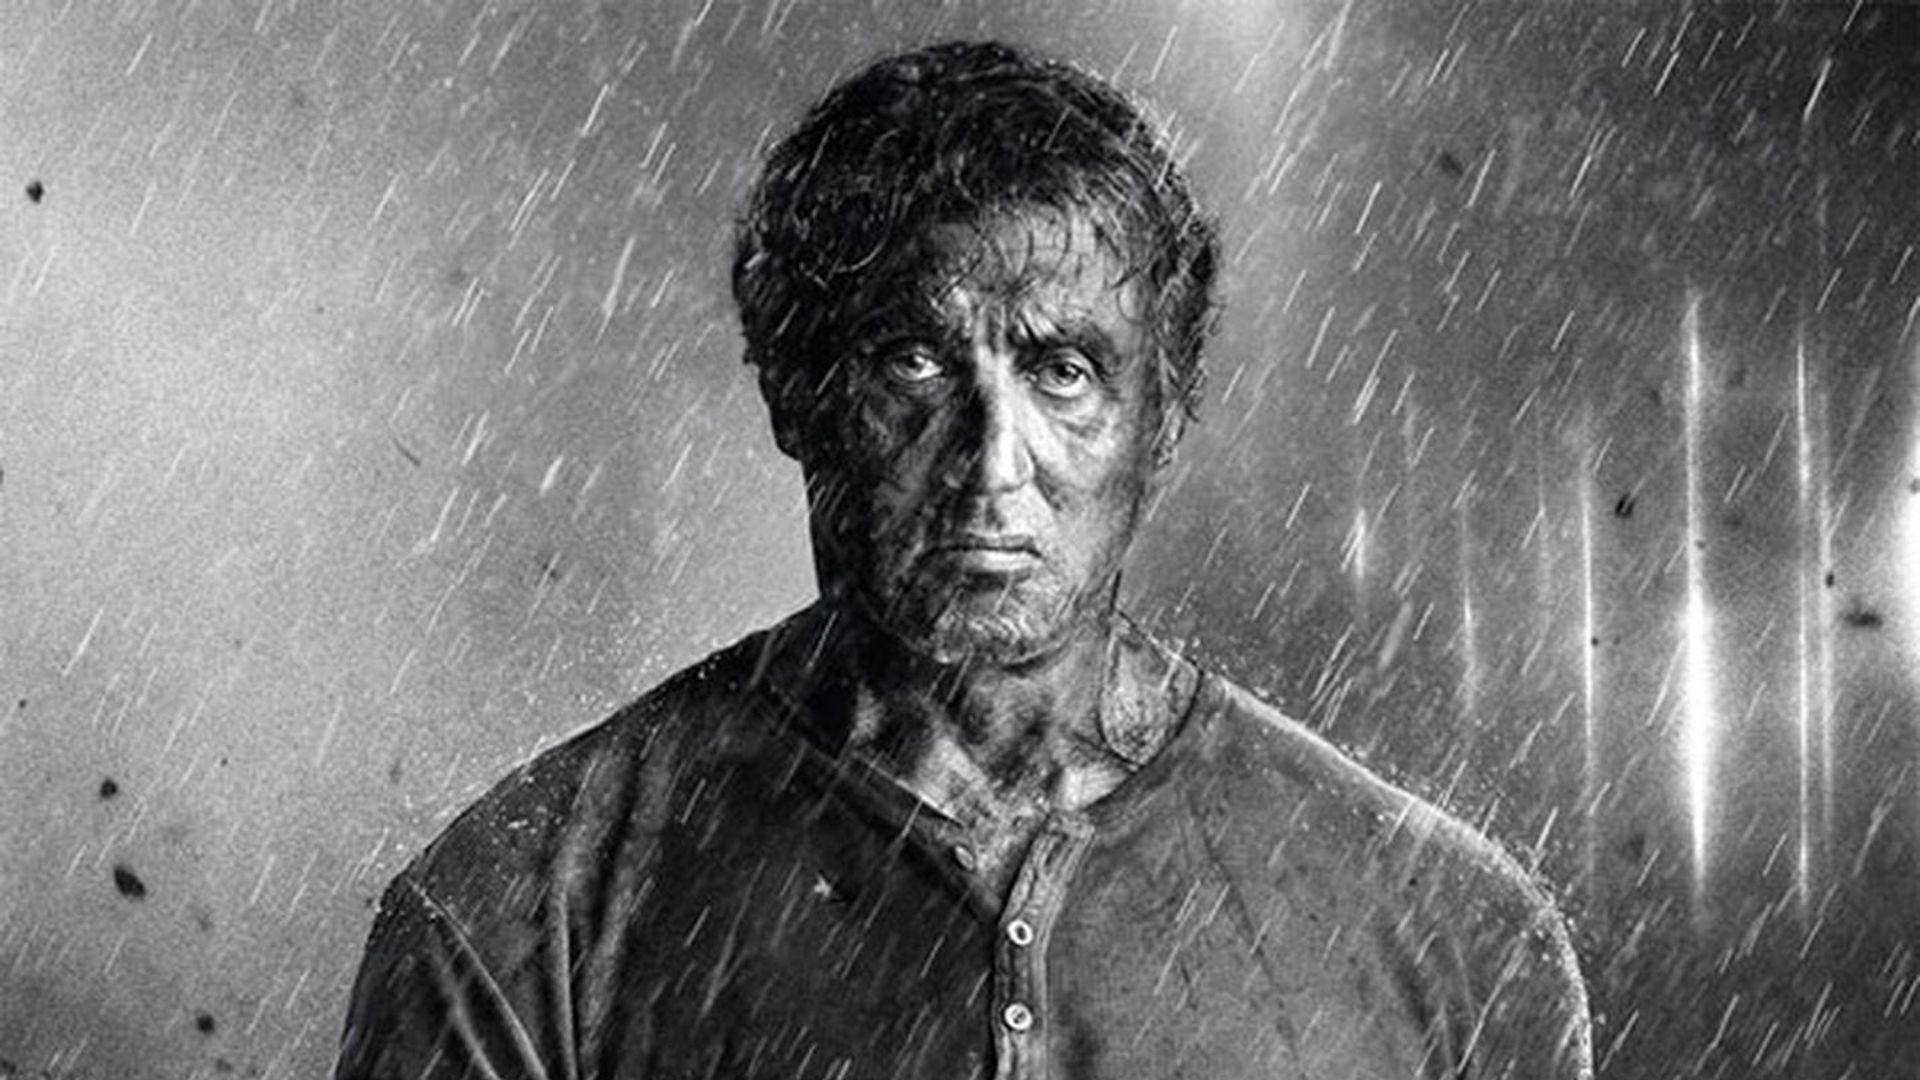 "Rambo: Last Blood" d'Adrian Grunberg avec Sylvester Stallone sortira le 20 septembre prochain aux Etats-Unis.